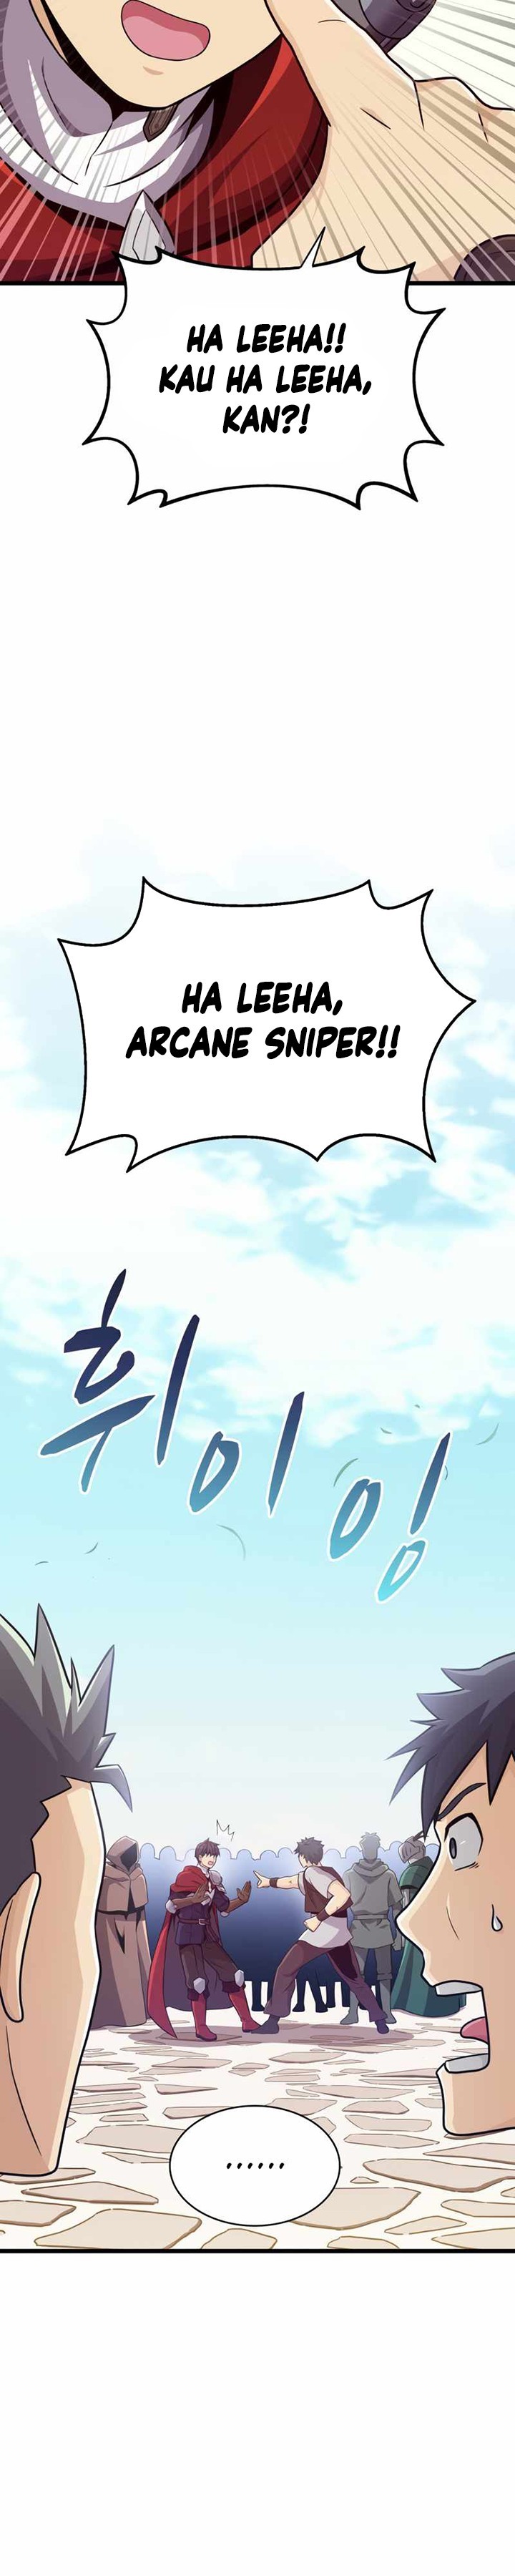 Arcane Sniper Chapter 87